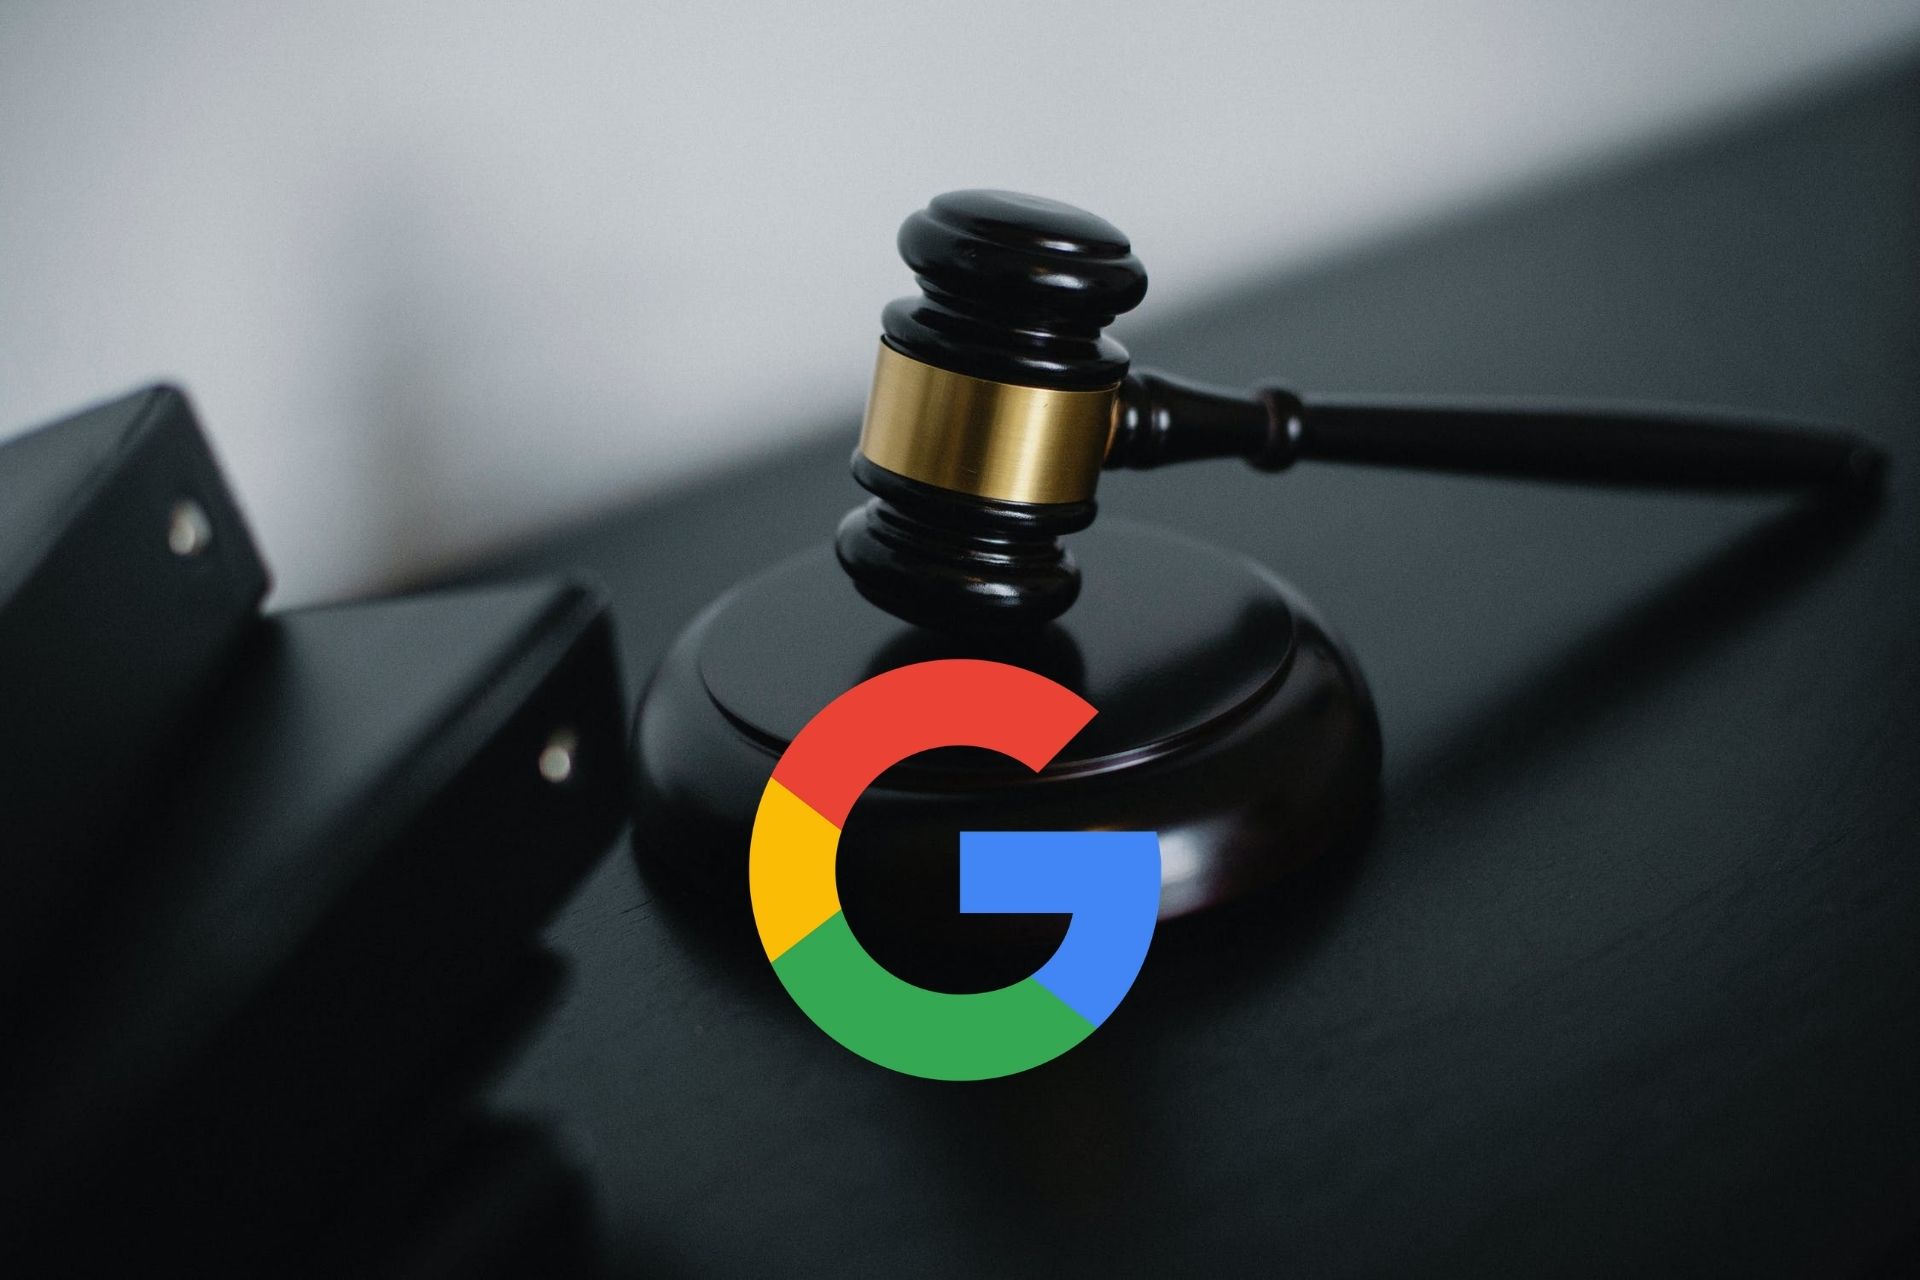 justice department files lawsuit against Google 2020